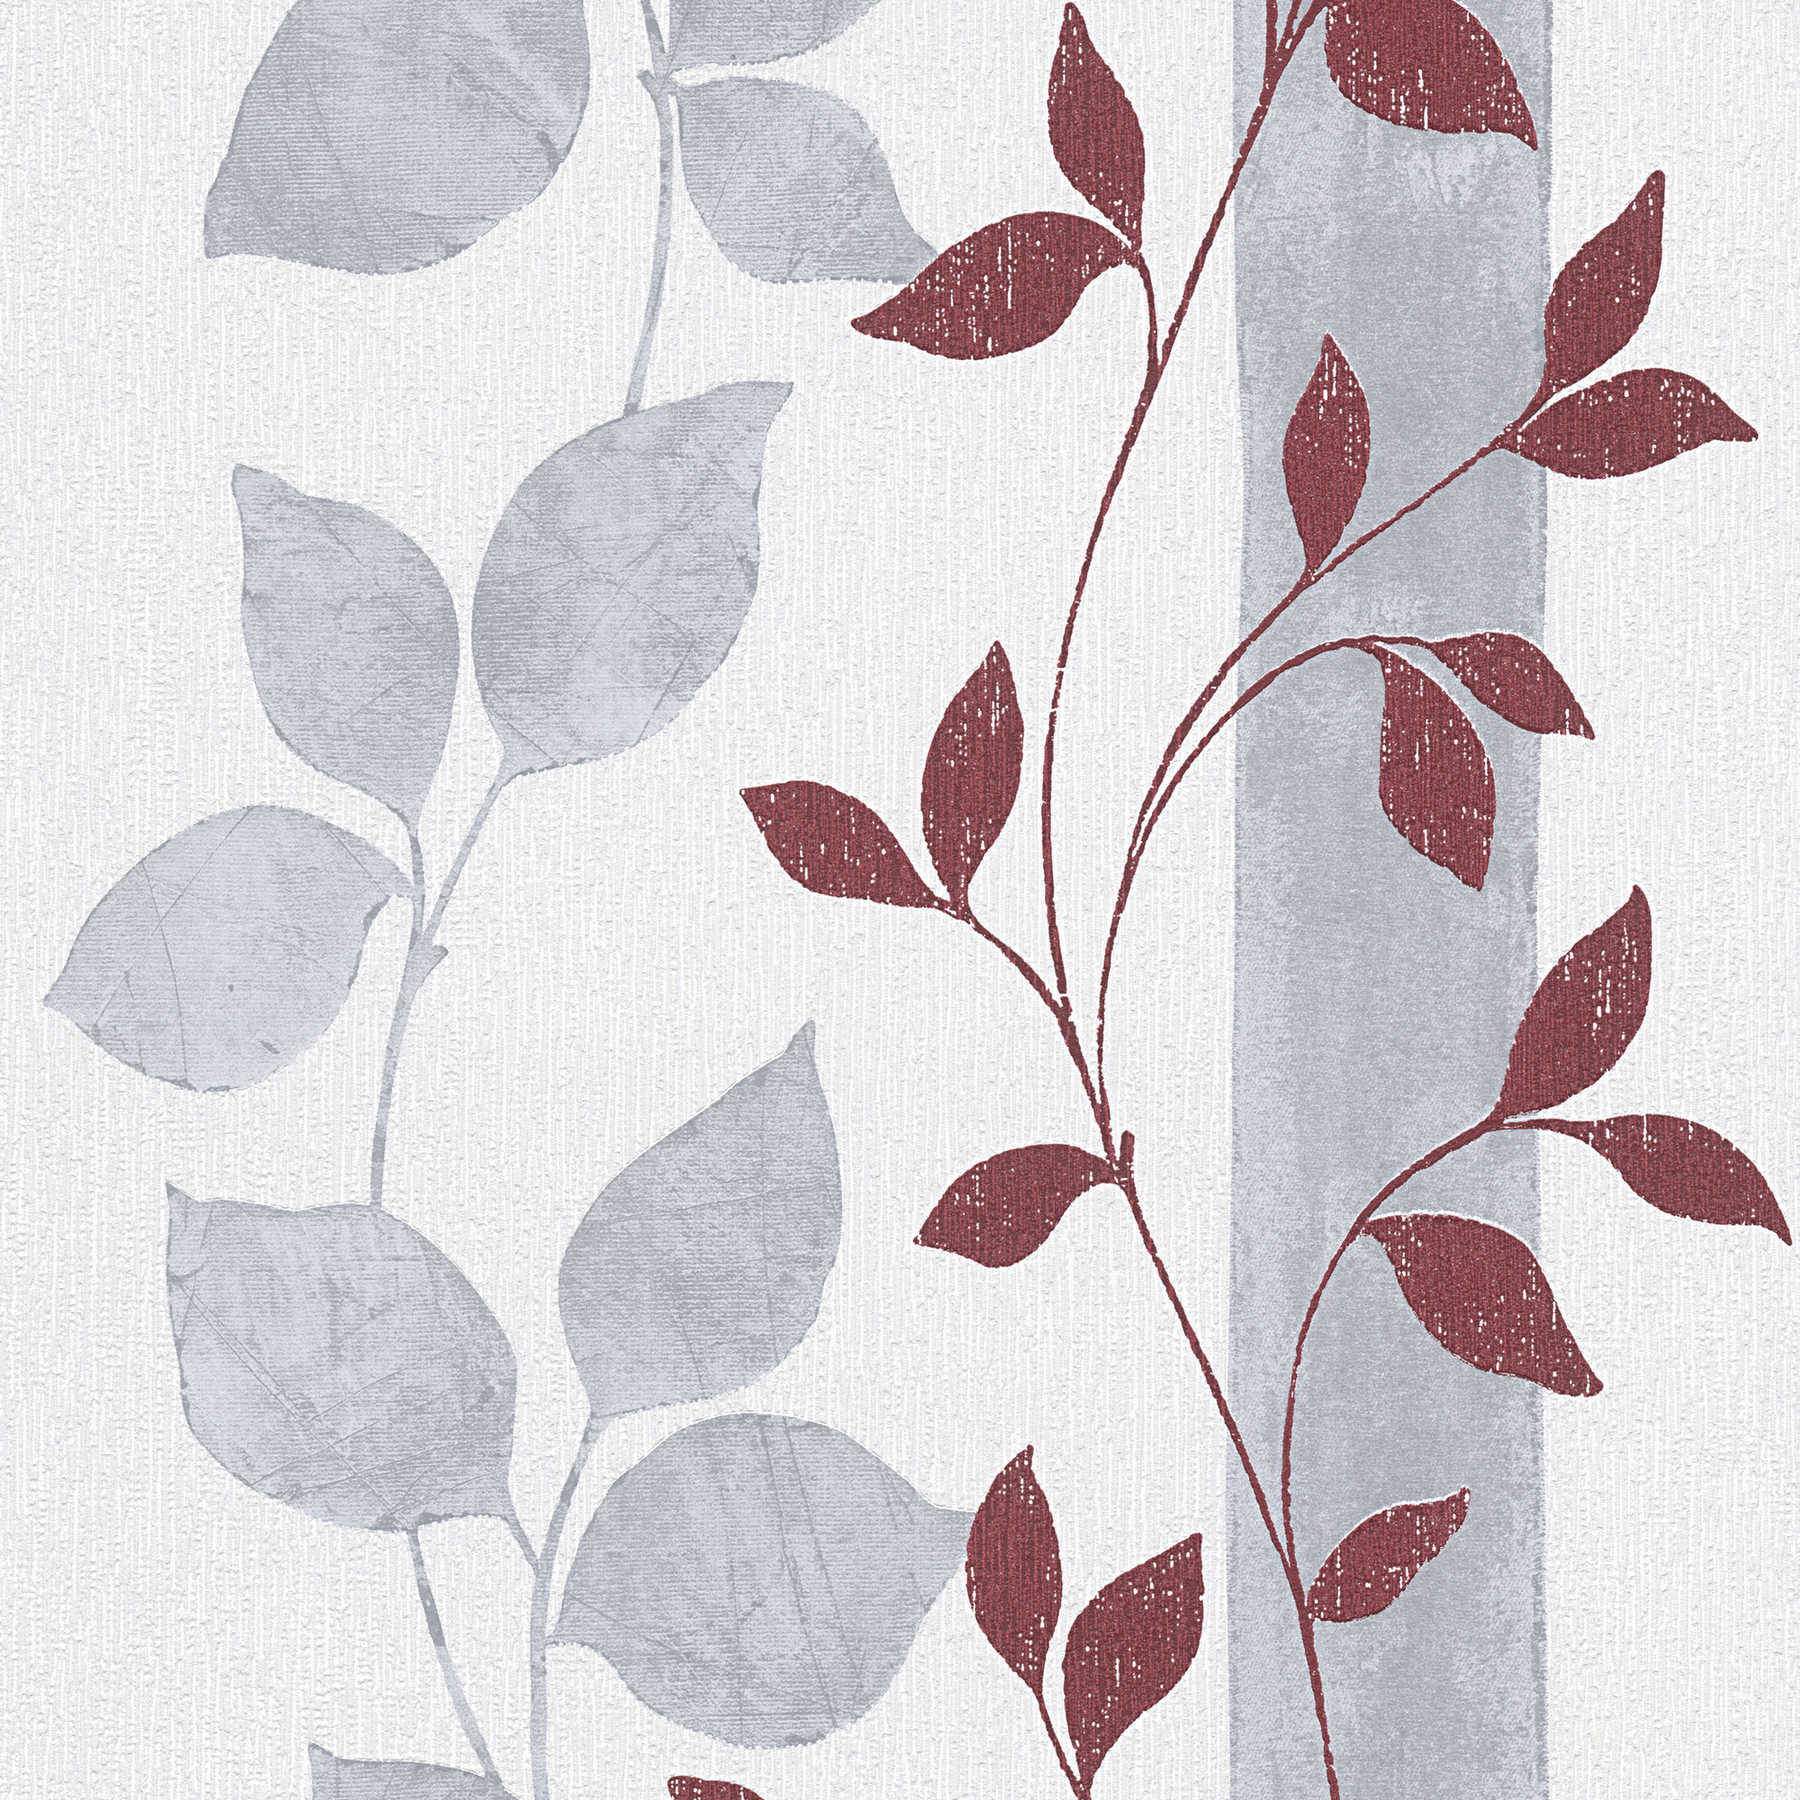         Textured wallpaper leaf tendrils & stripes - red, grey
    